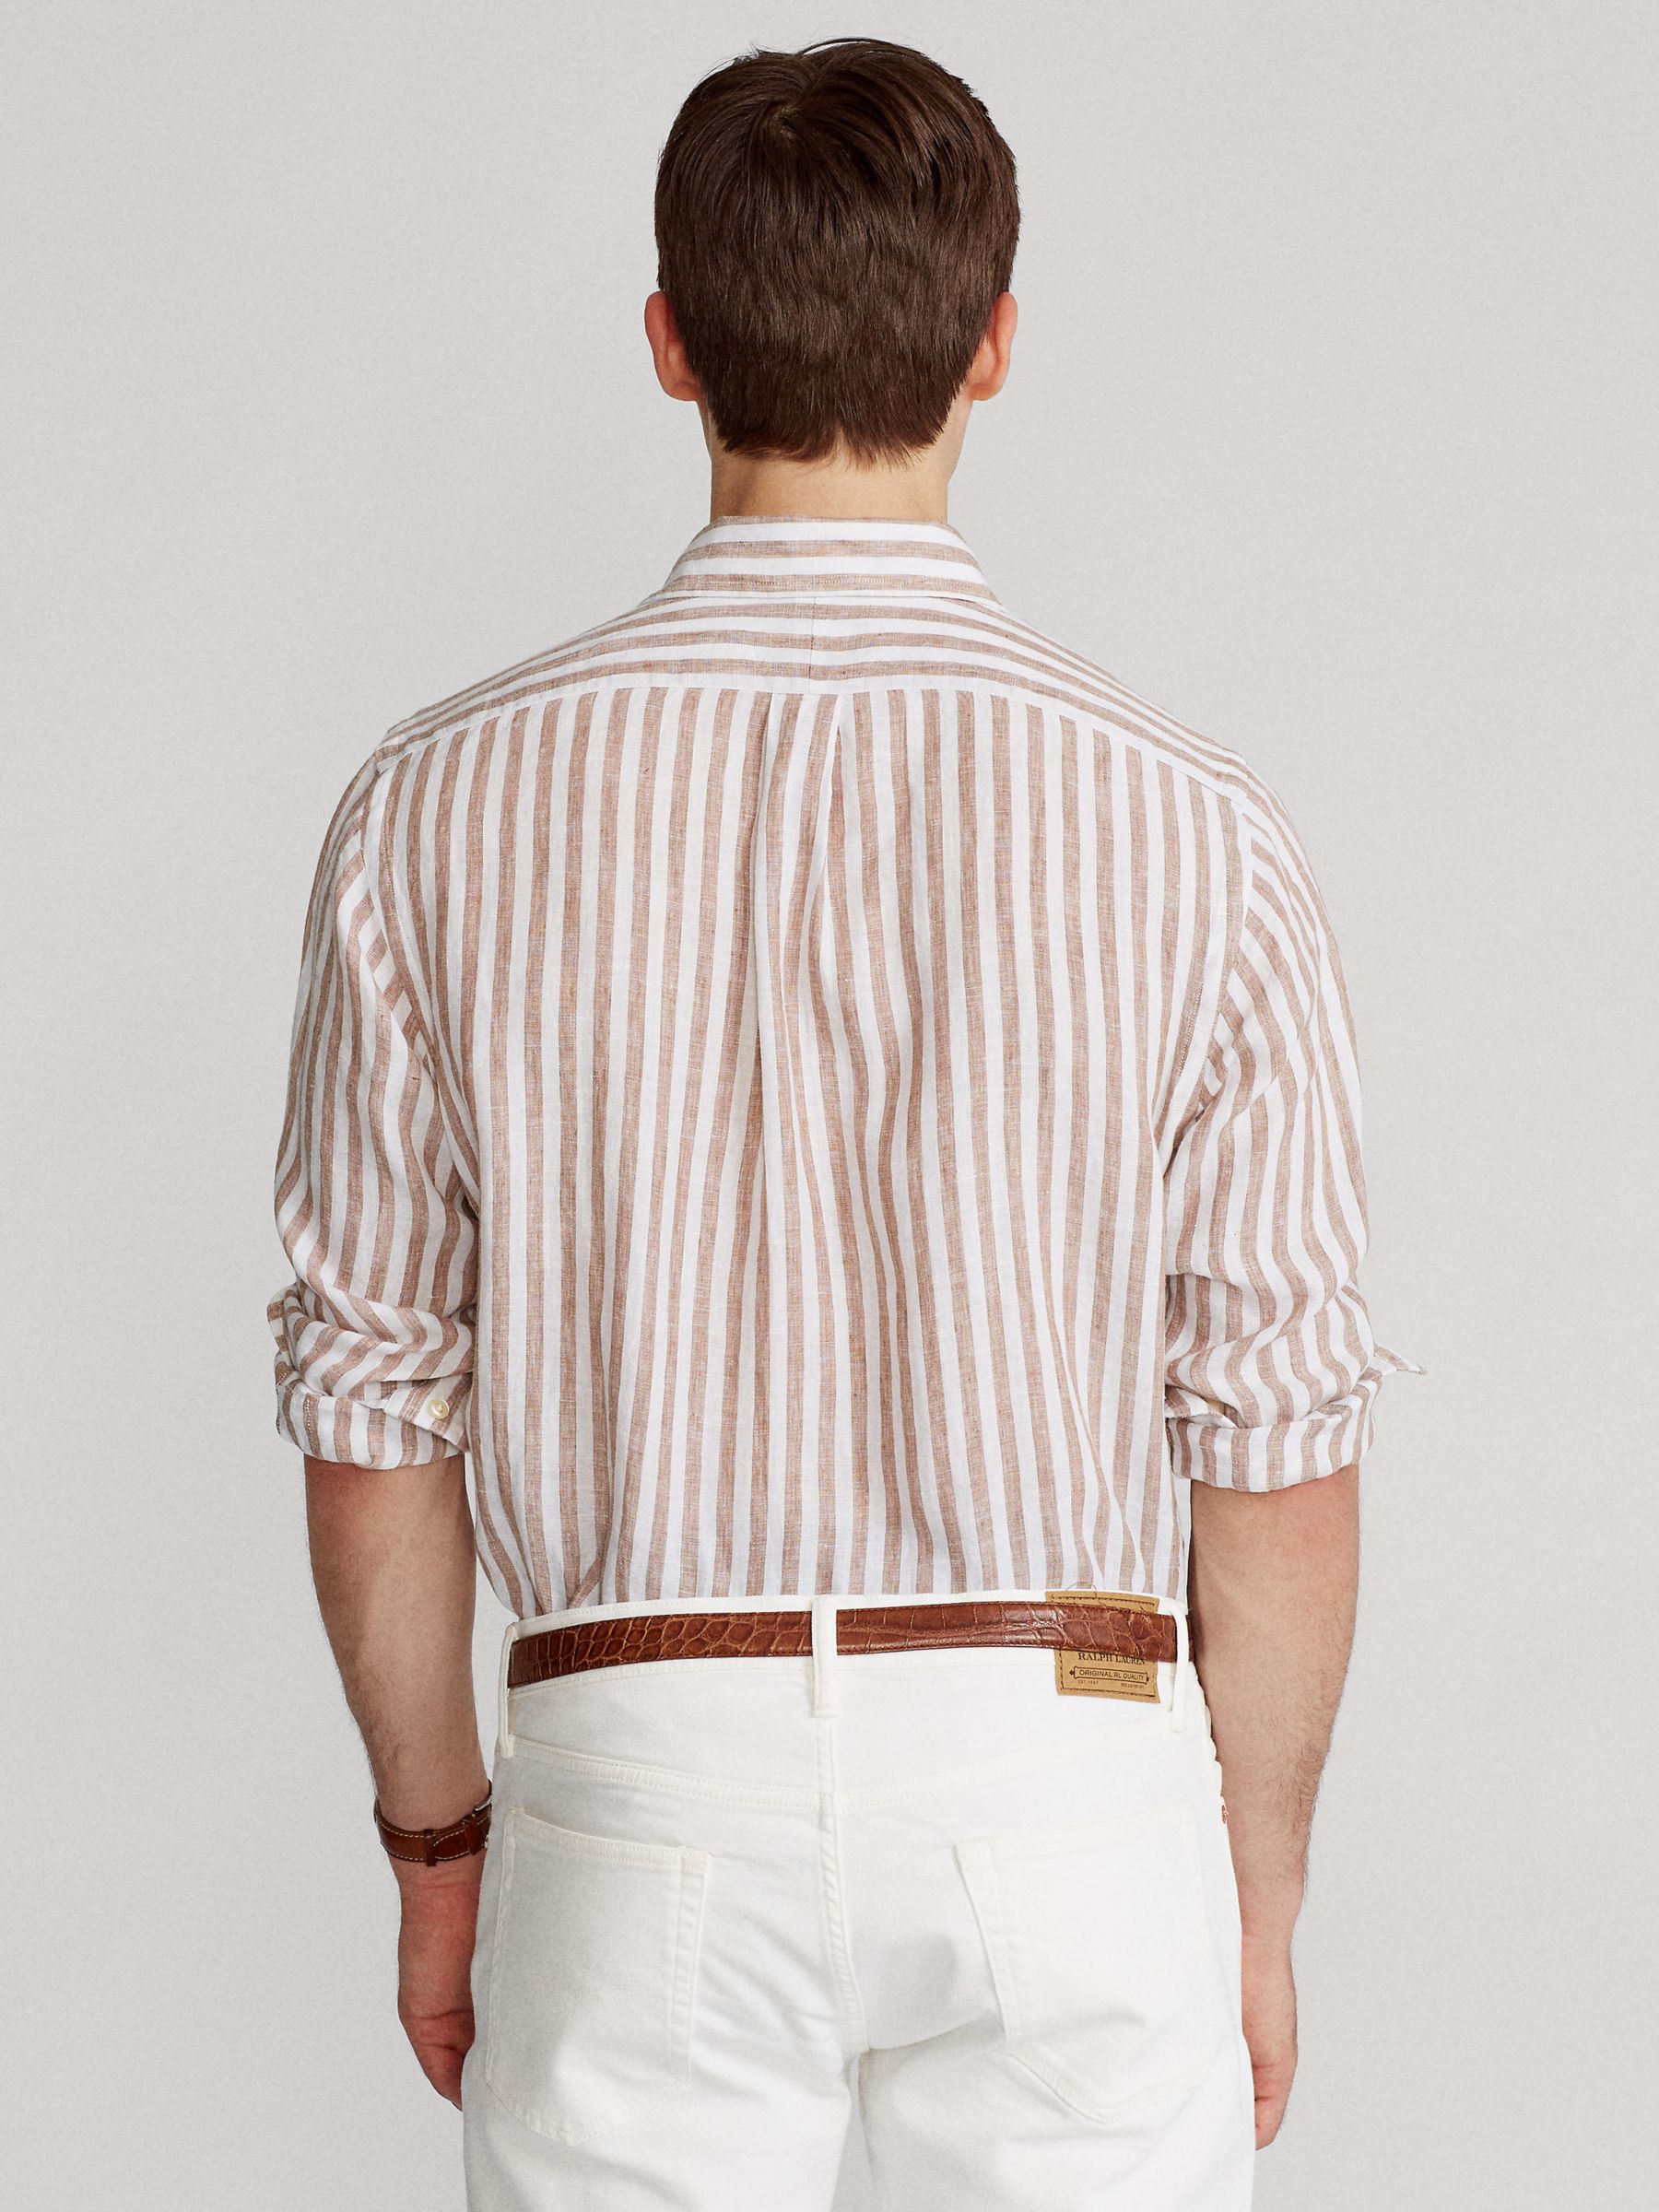 Ralph Lauren Stripe Linen Long Sleeve Shirt, Khaki/White, M